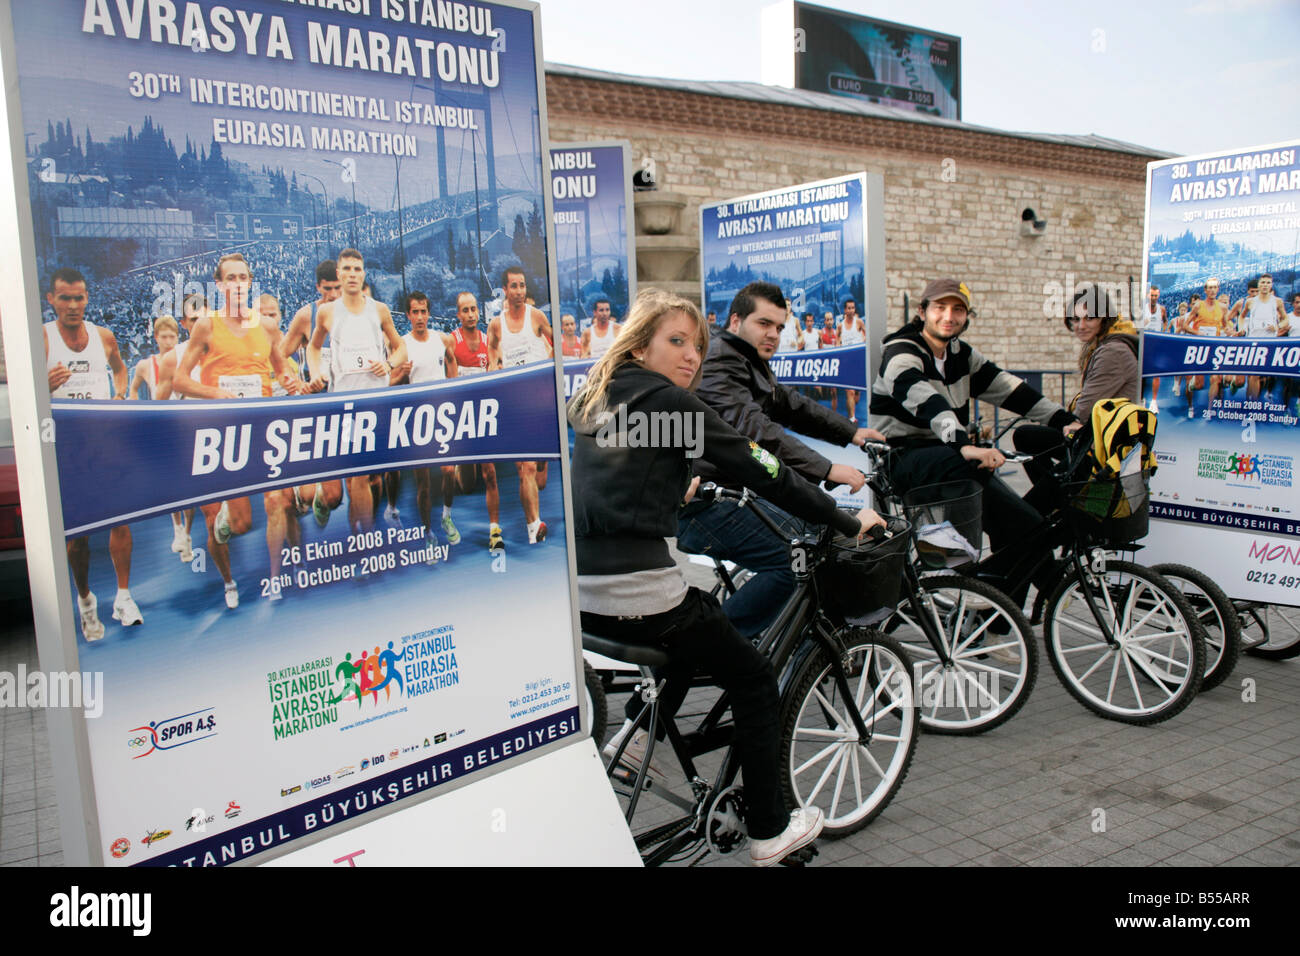 Advertising the 30th Intercontinental Istanbul Eurasia Marathon in Taksim, Istanbul, Turkey, 2008 Stock Photo